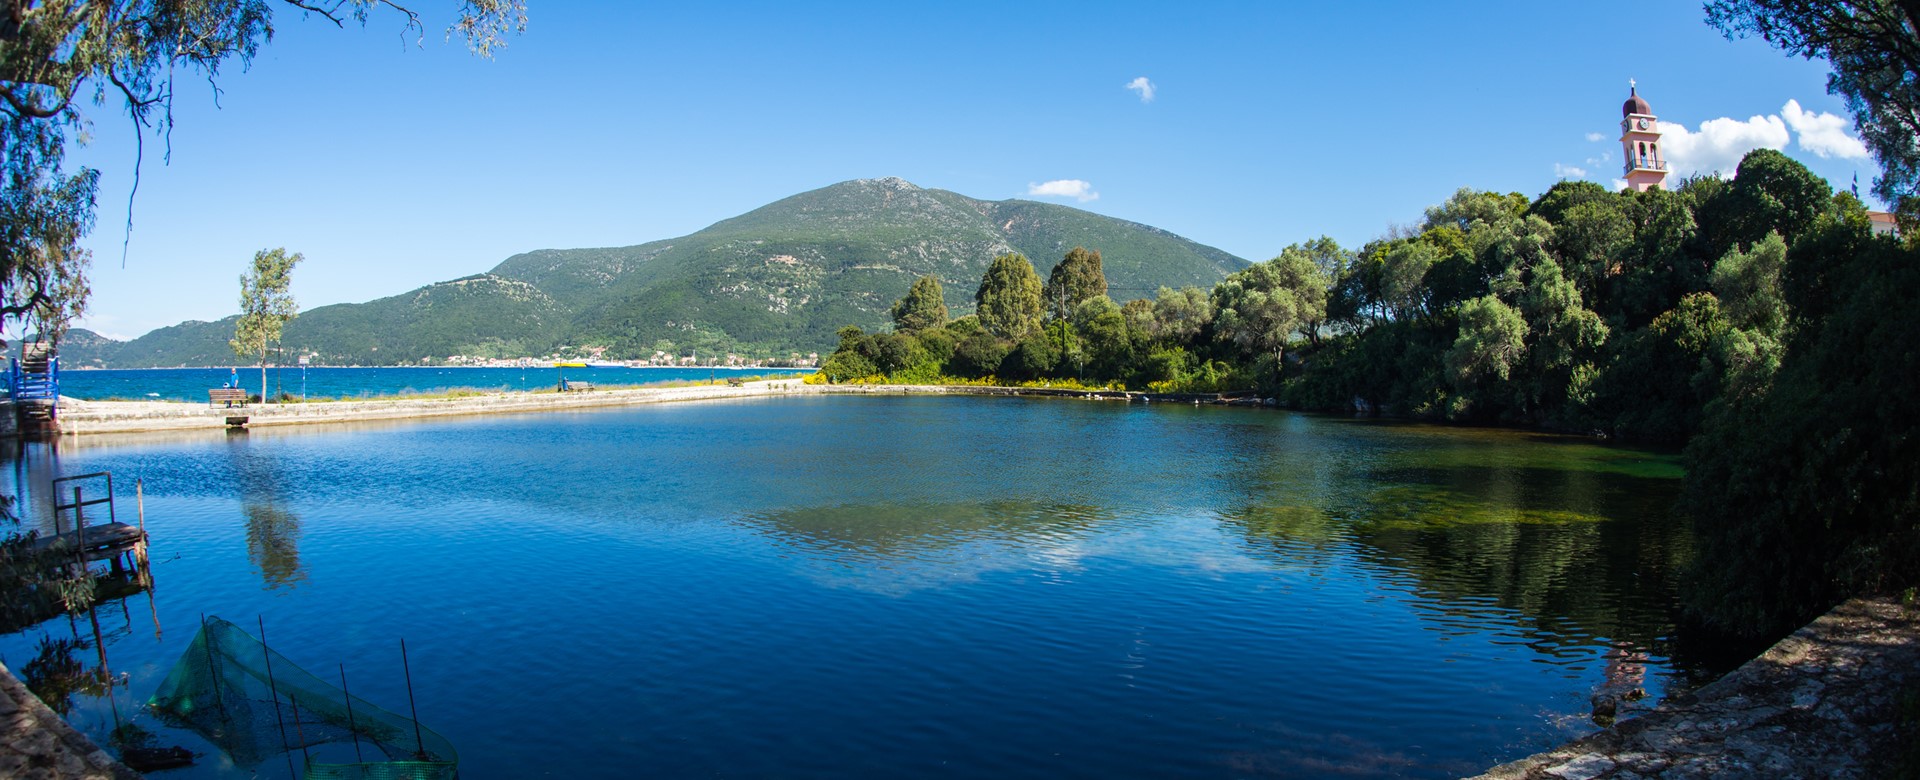 Karavomilos lake, beach and views of hills, Kefalonia, Greek Islands